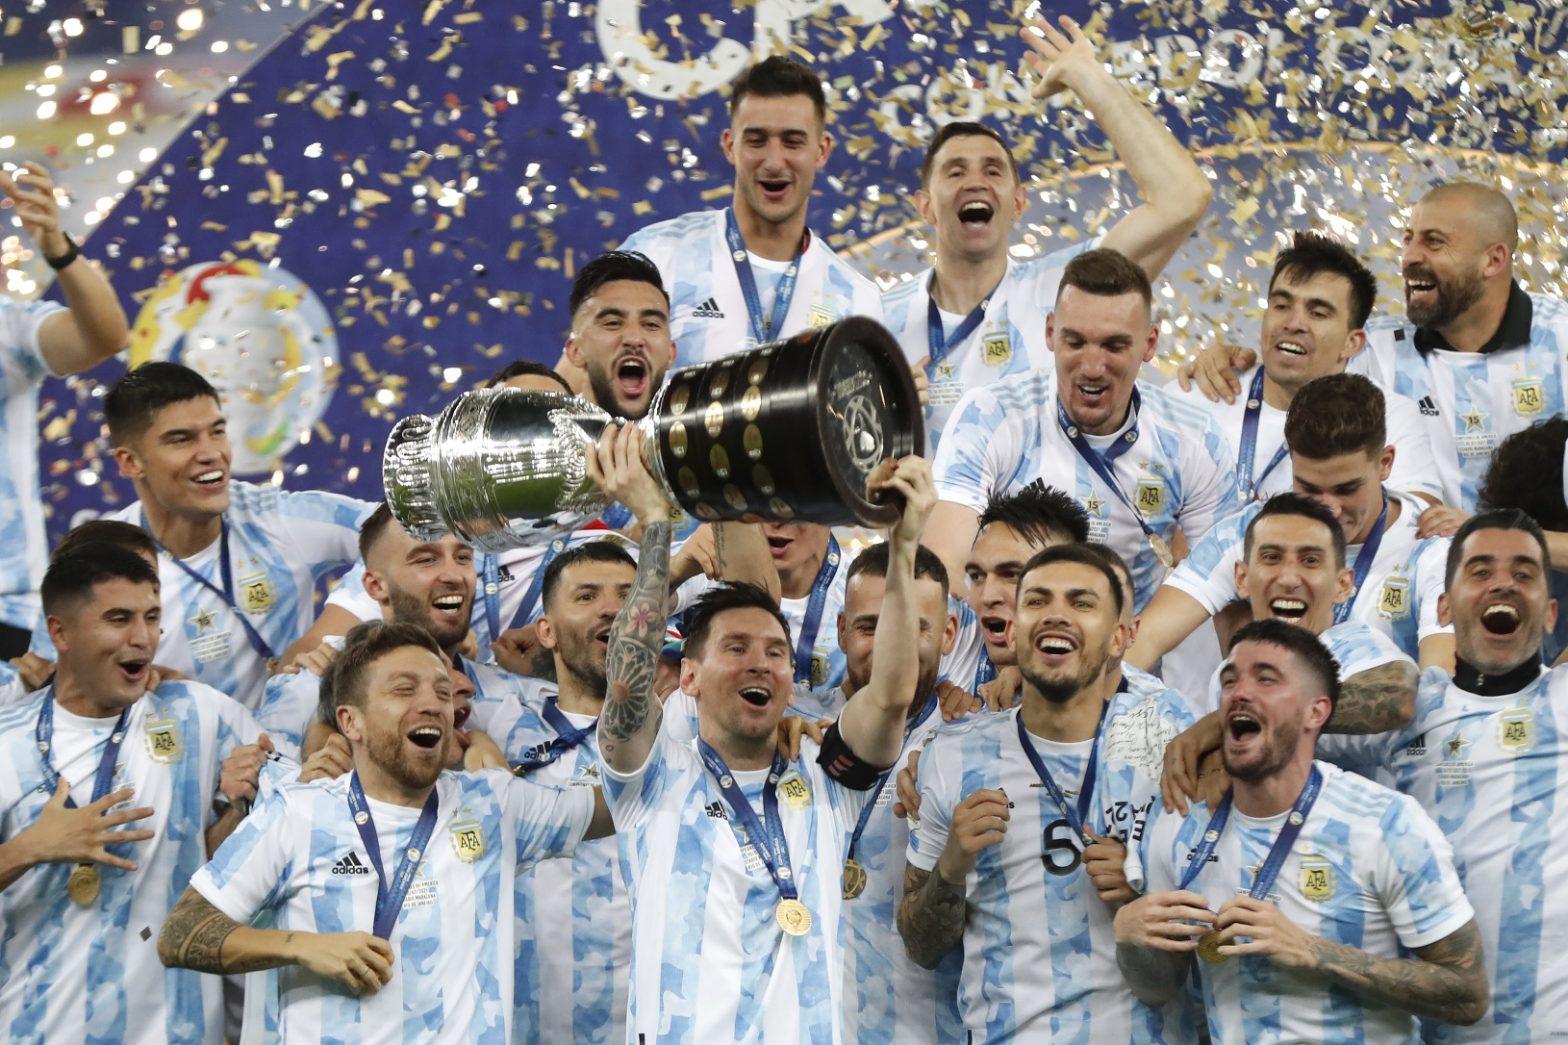 Argentina beats Brazil to Lift Copa America 2021 | अर्जेंटिनाने ब्राझीलला नमवत कोपा अमेरिका 2021 चषक जिंकला_30.1